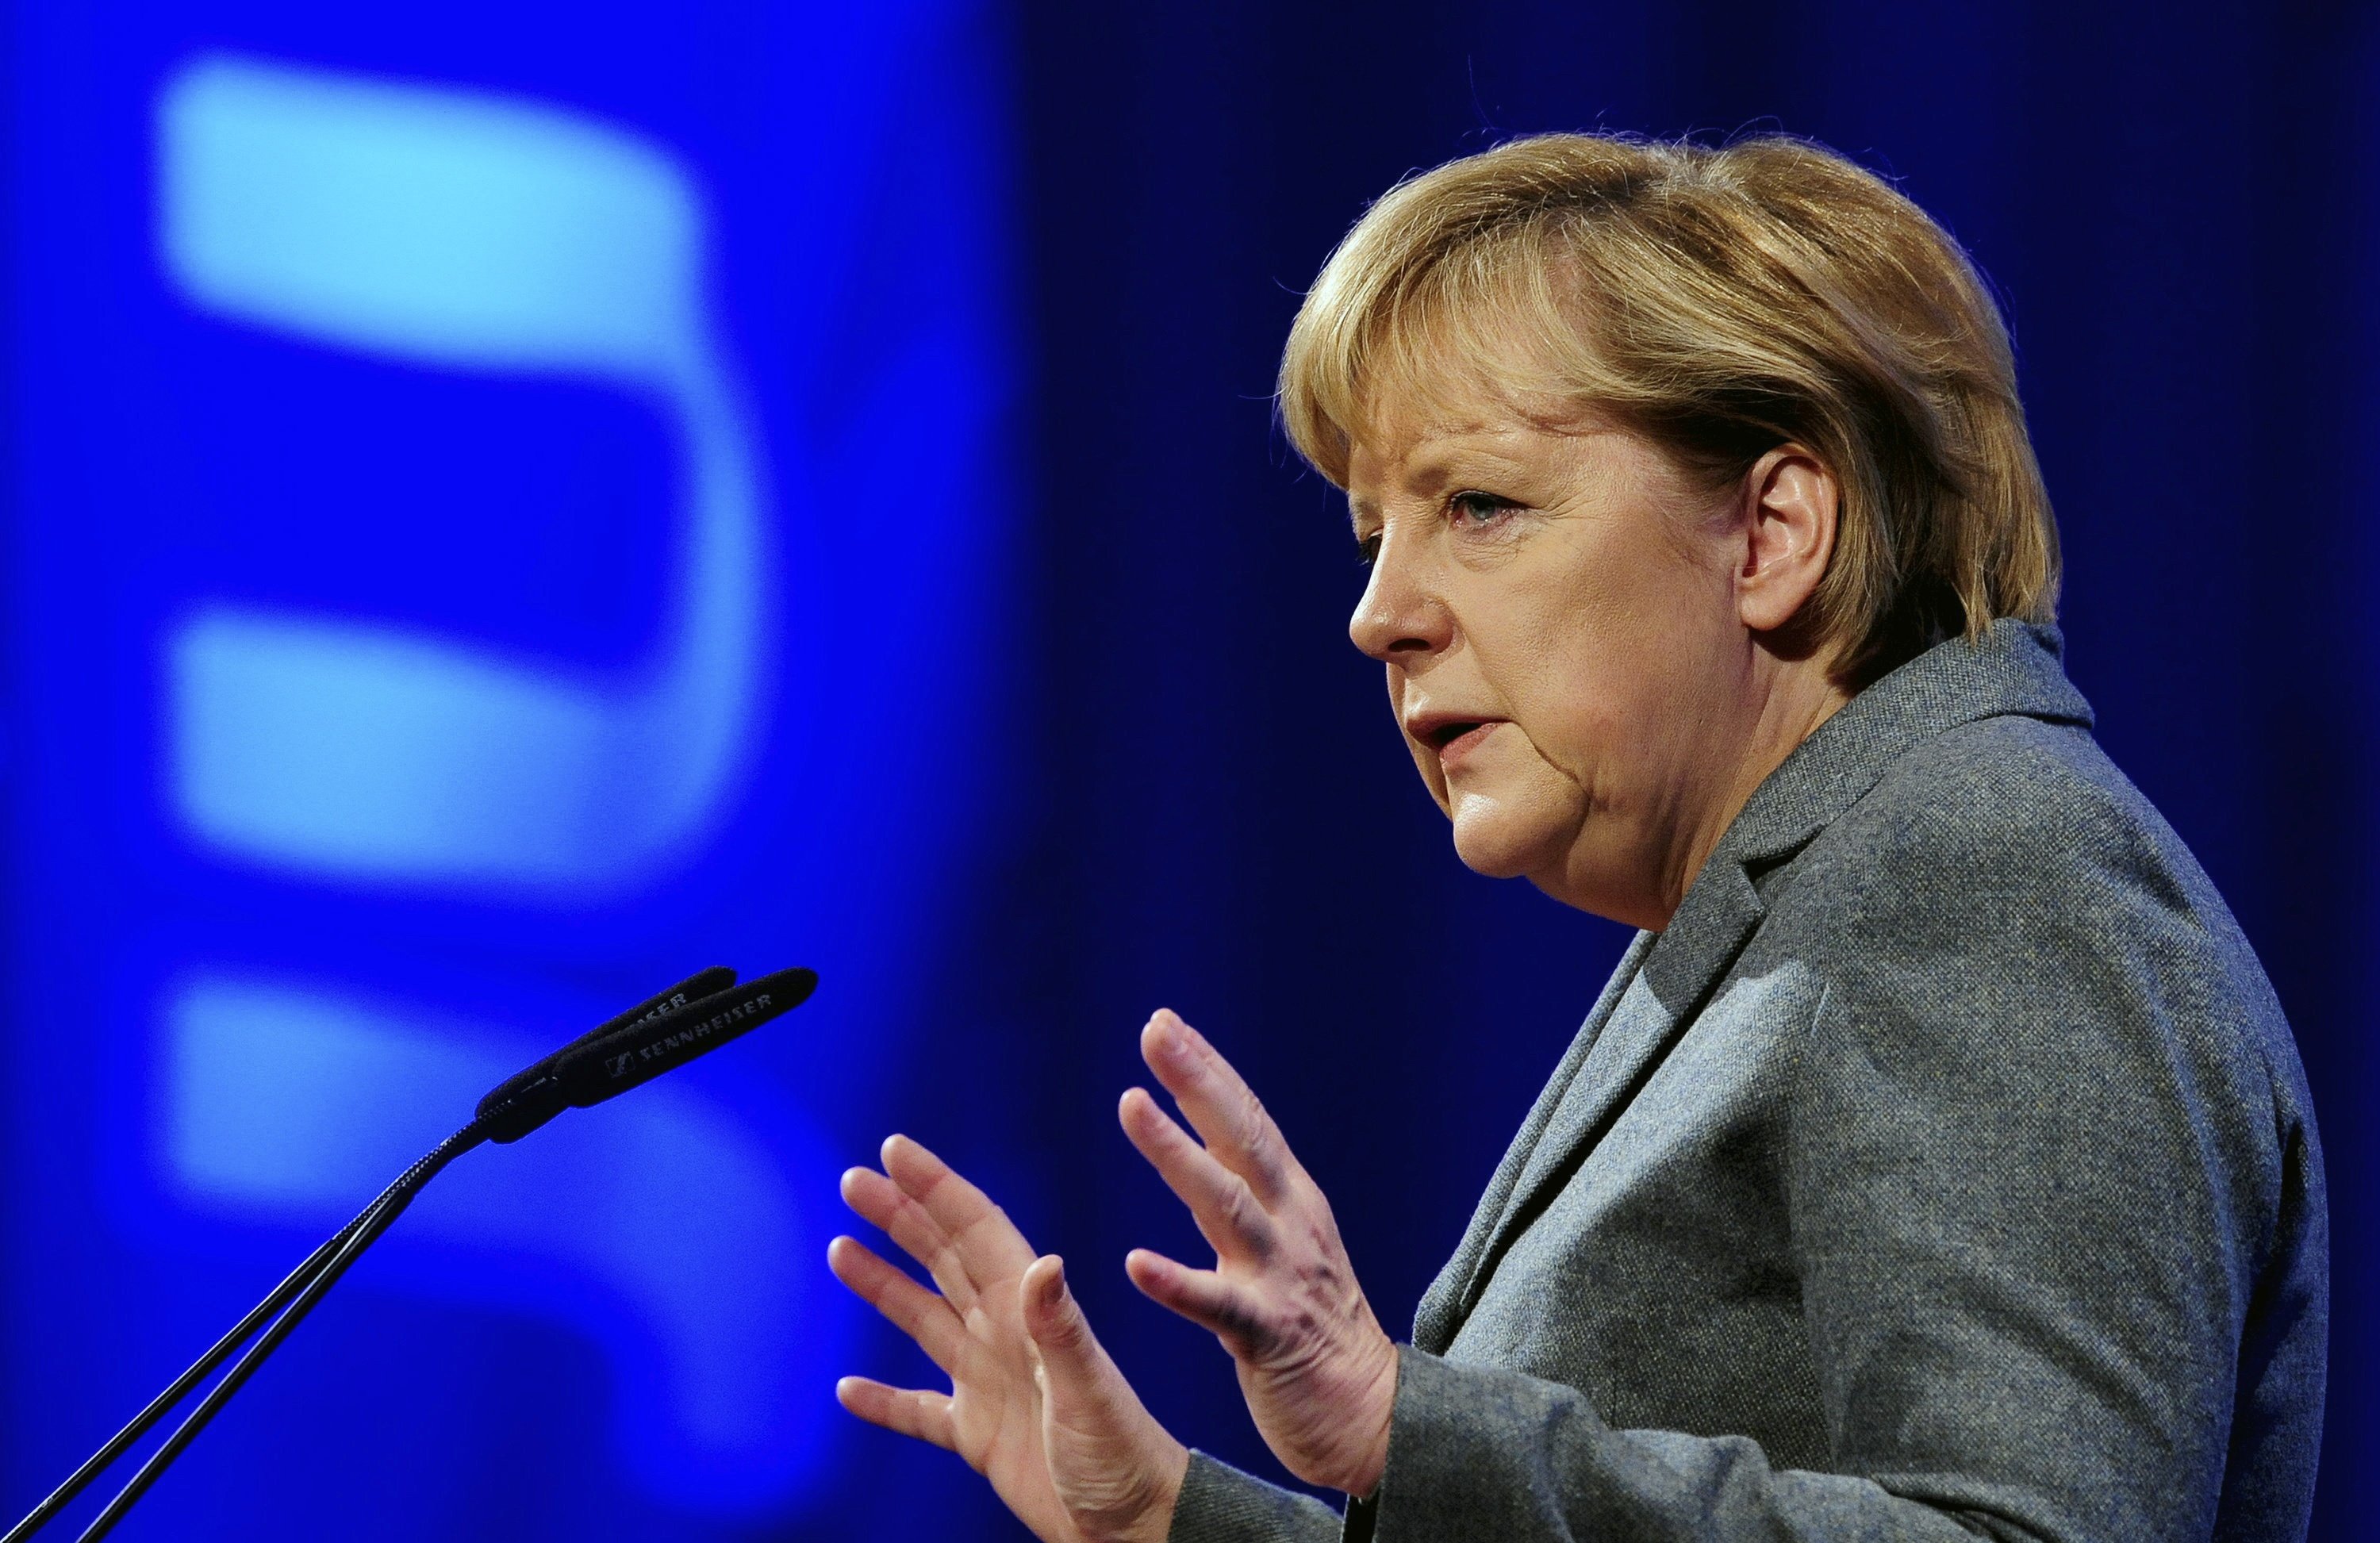 Mέρκελ: "Θα ήθελα η Ελλάδα να παραμείνει στην ευρωζώνη"